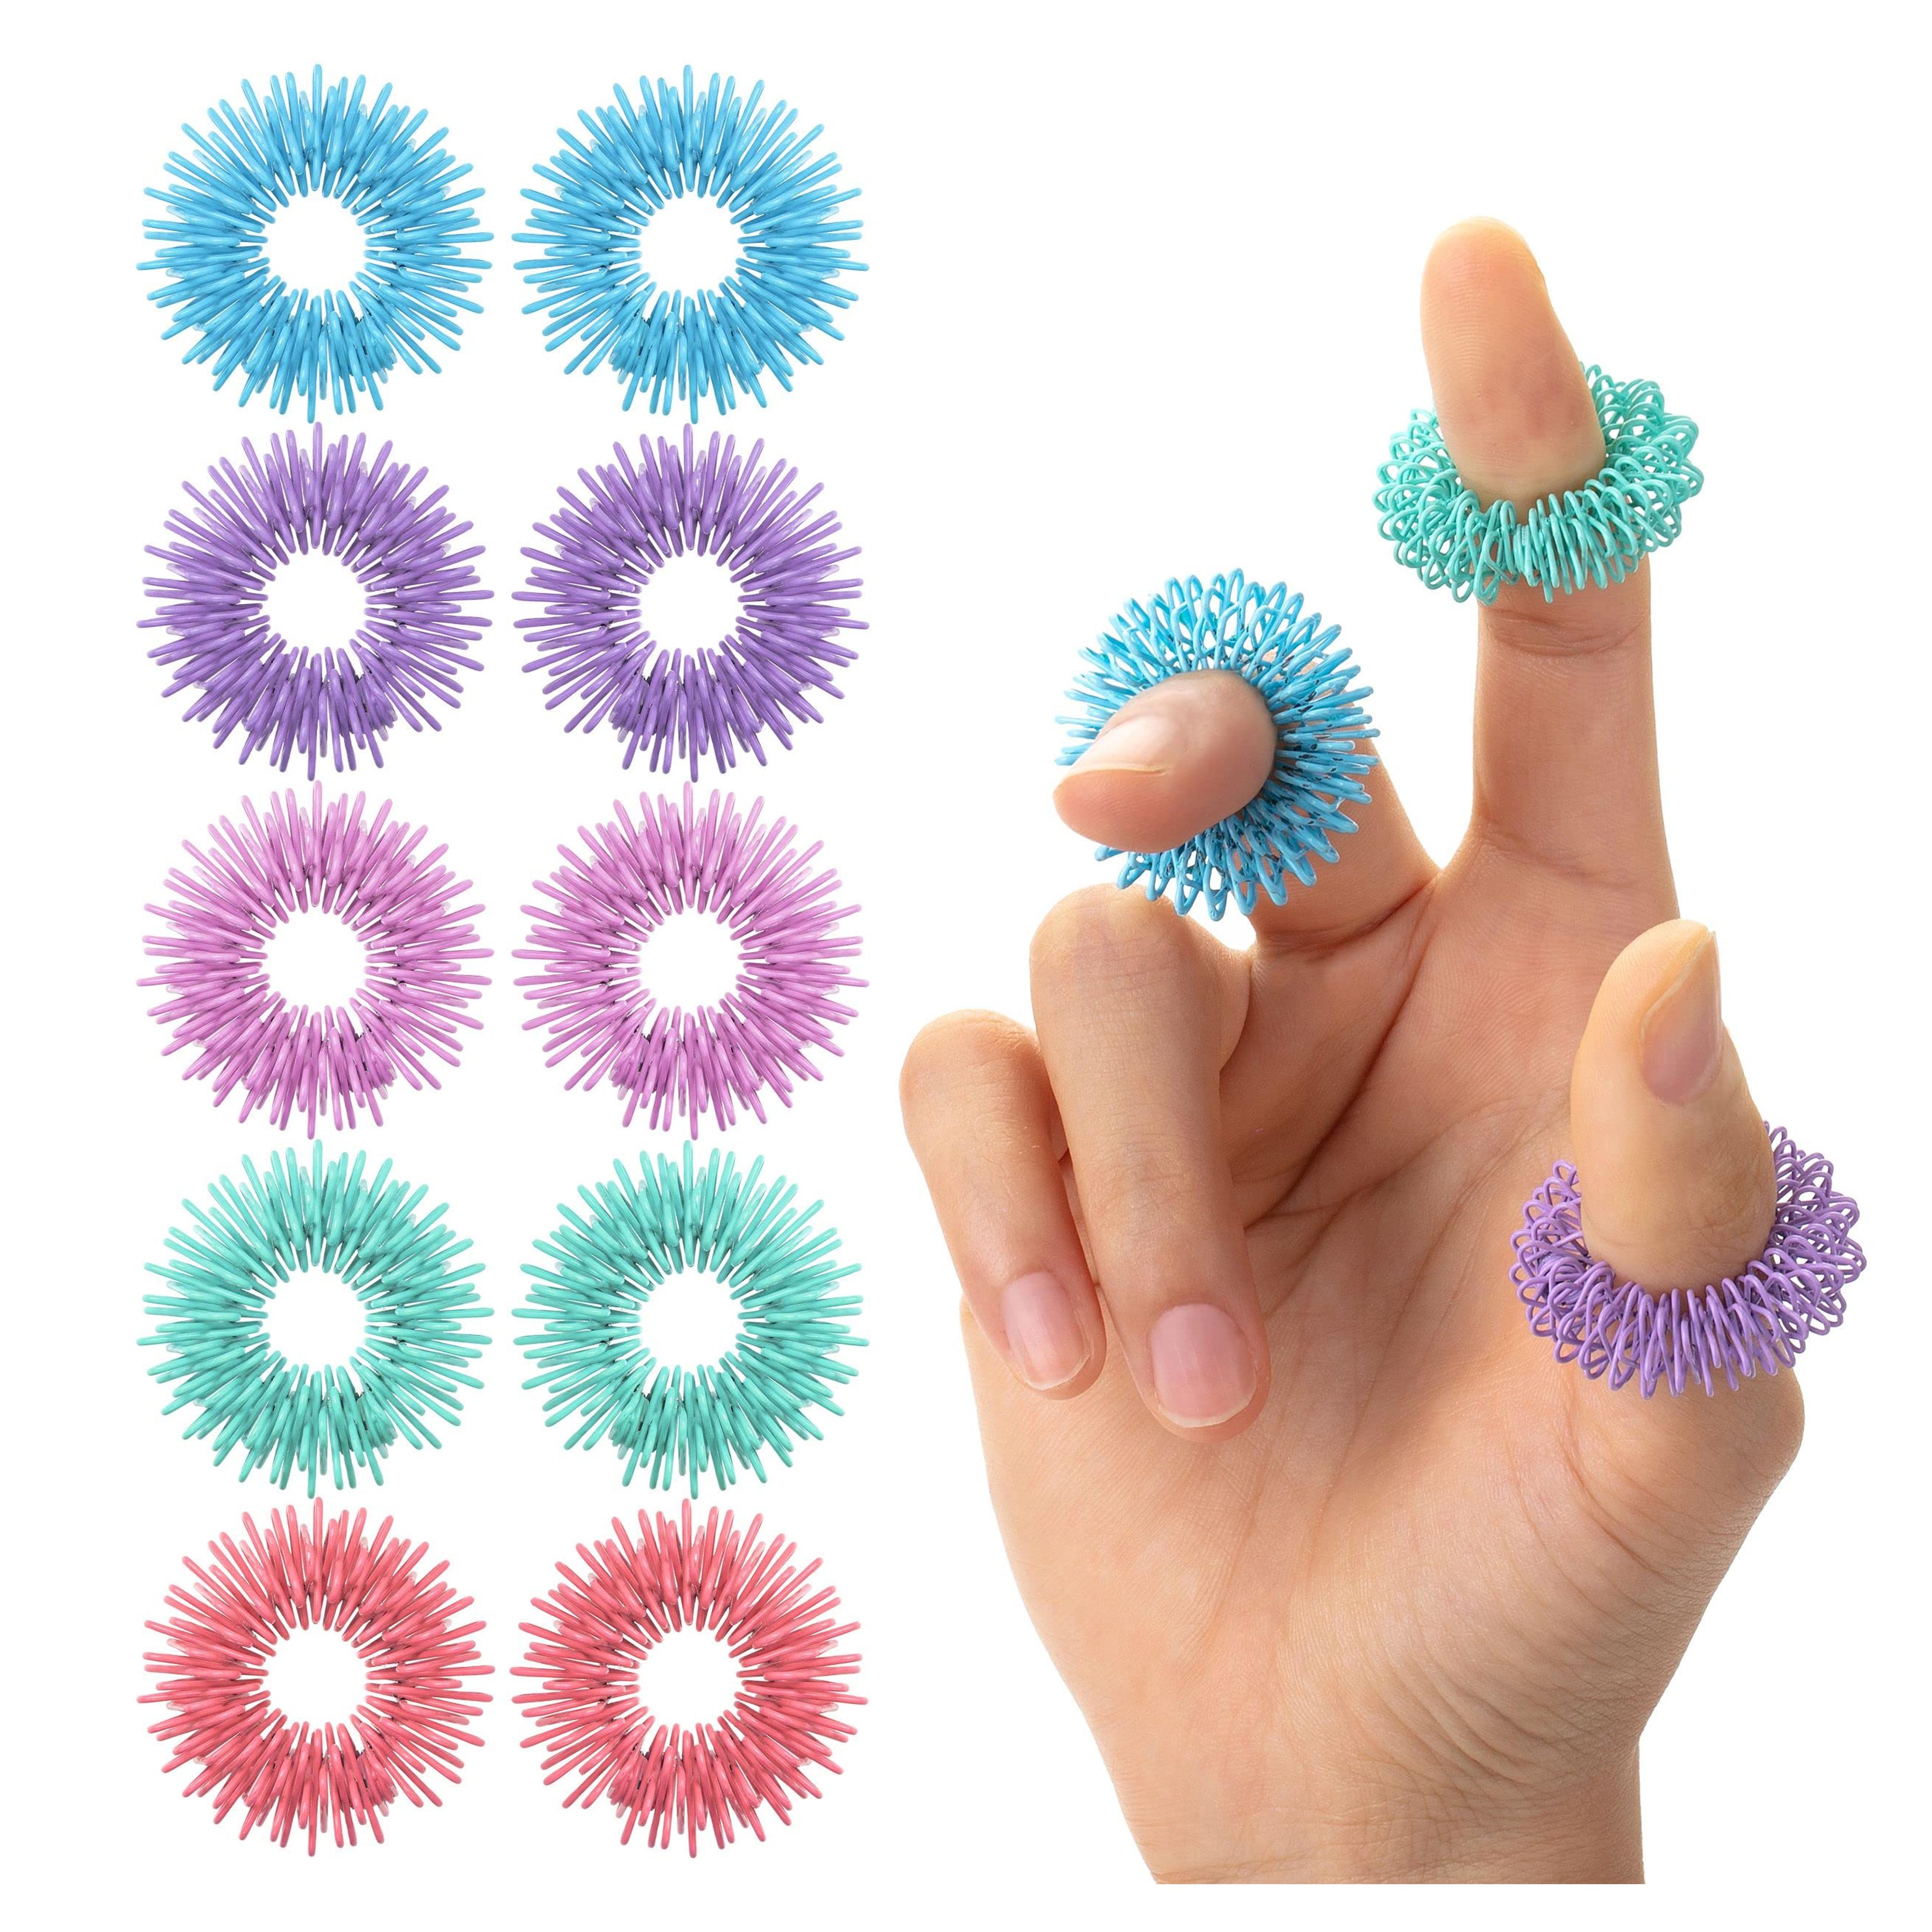 Mr. Pen- Spiky Sensory Rings, 10 Pack, Pastel Colors, Stress Relief Fidget Sensory Toys, Fidget Rings, Fidget Ring for Anxiety, Stress Relief Rings, Massager for Fidget ADHD Autism